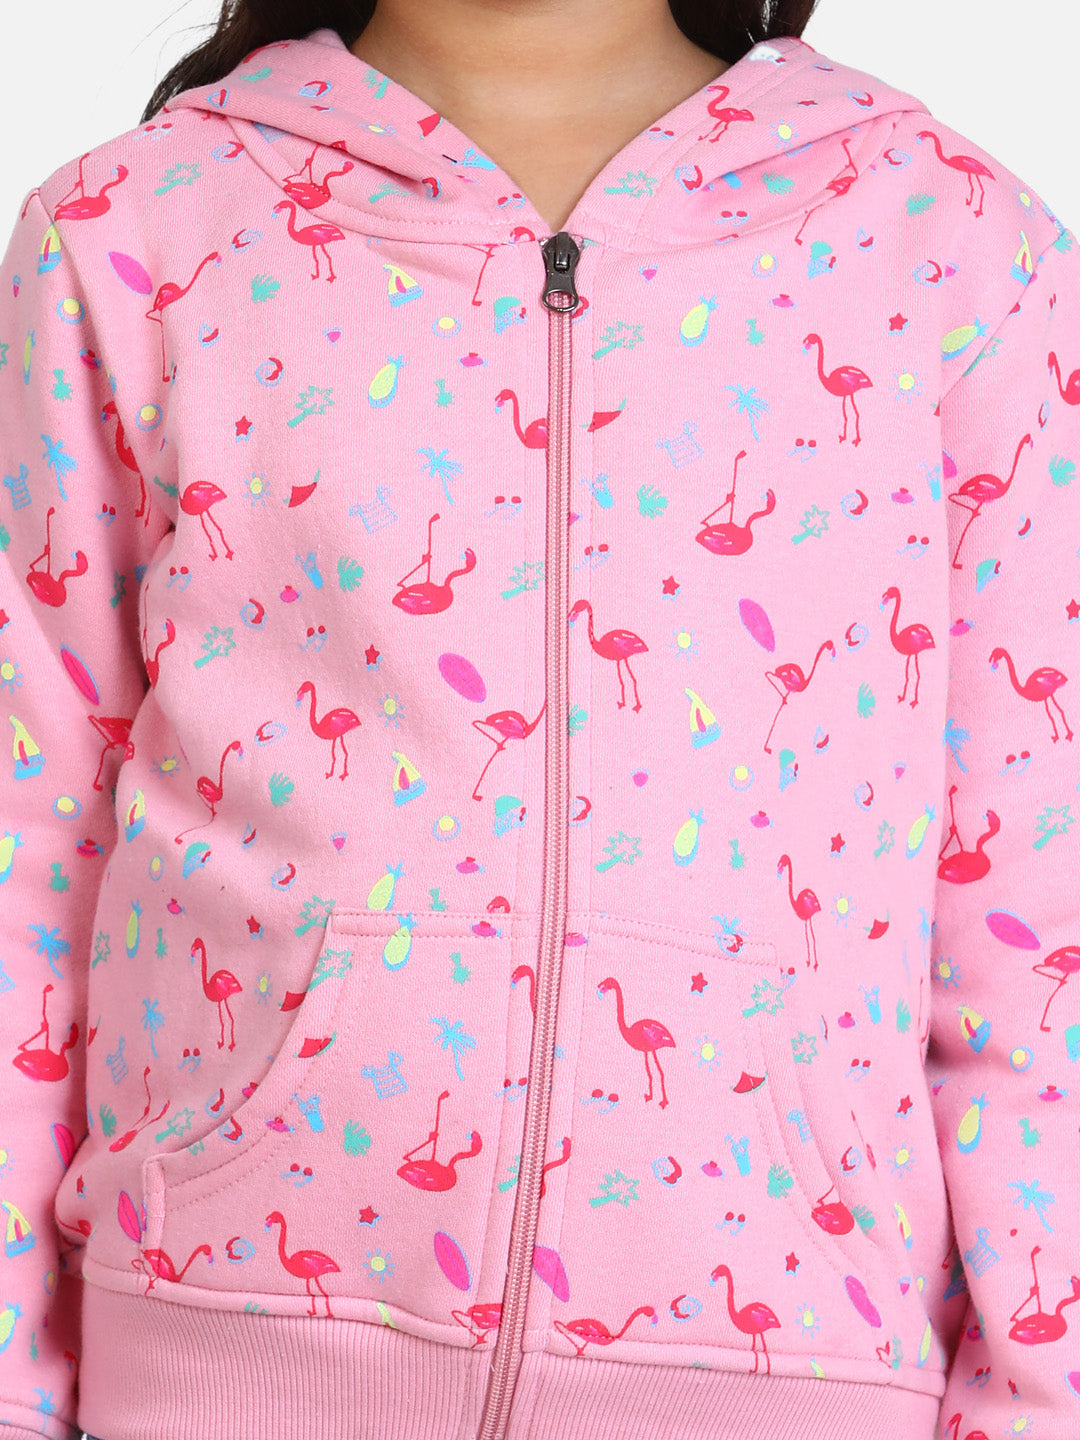 Girls Light Pink Flamingo Printed Jacket with Hoodie